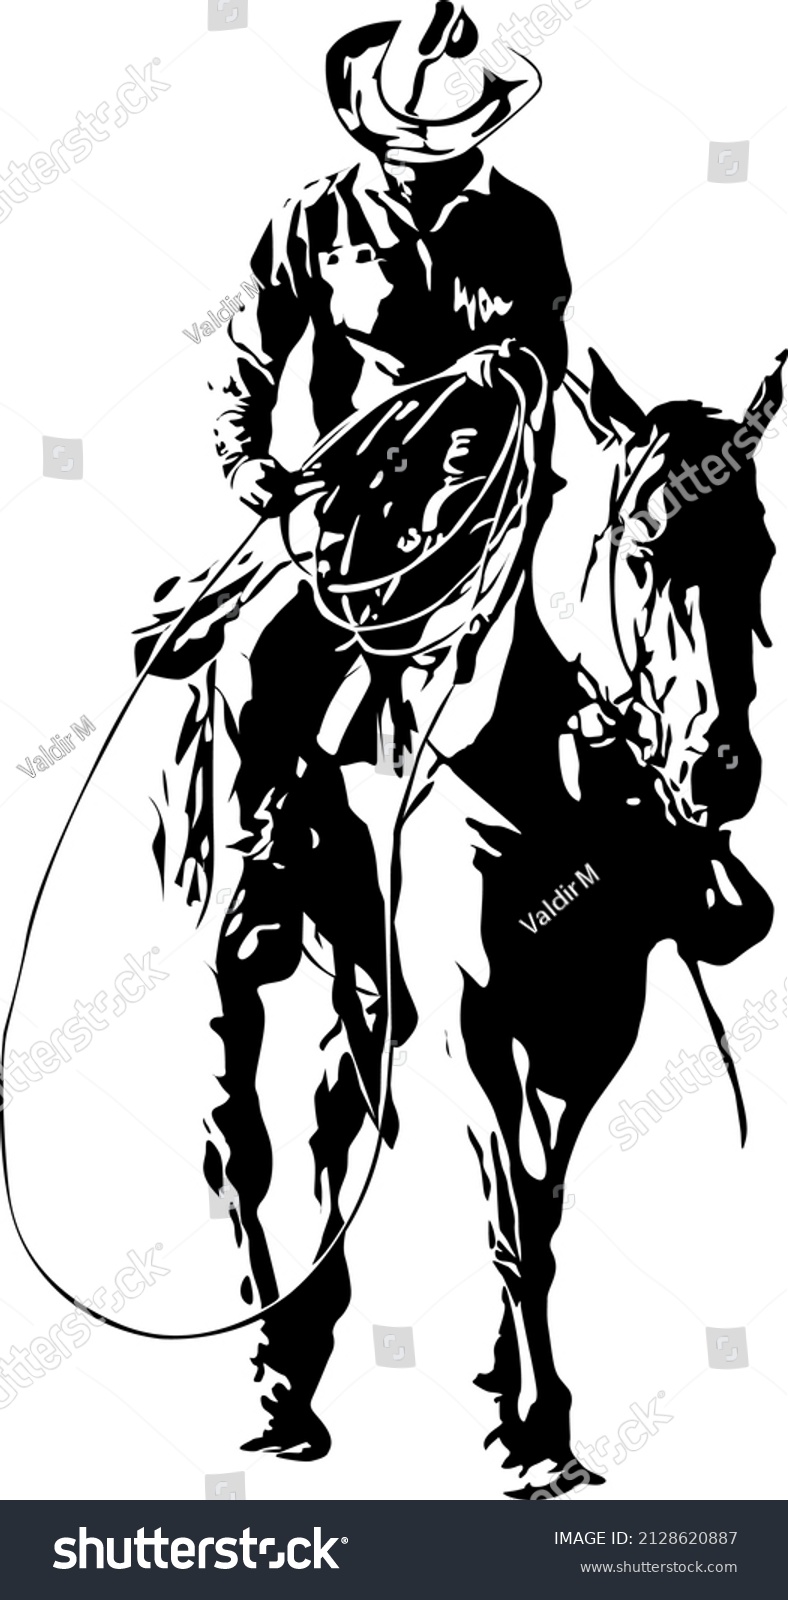 SVG of cowboy illustration on top of horse with noose in hands svg